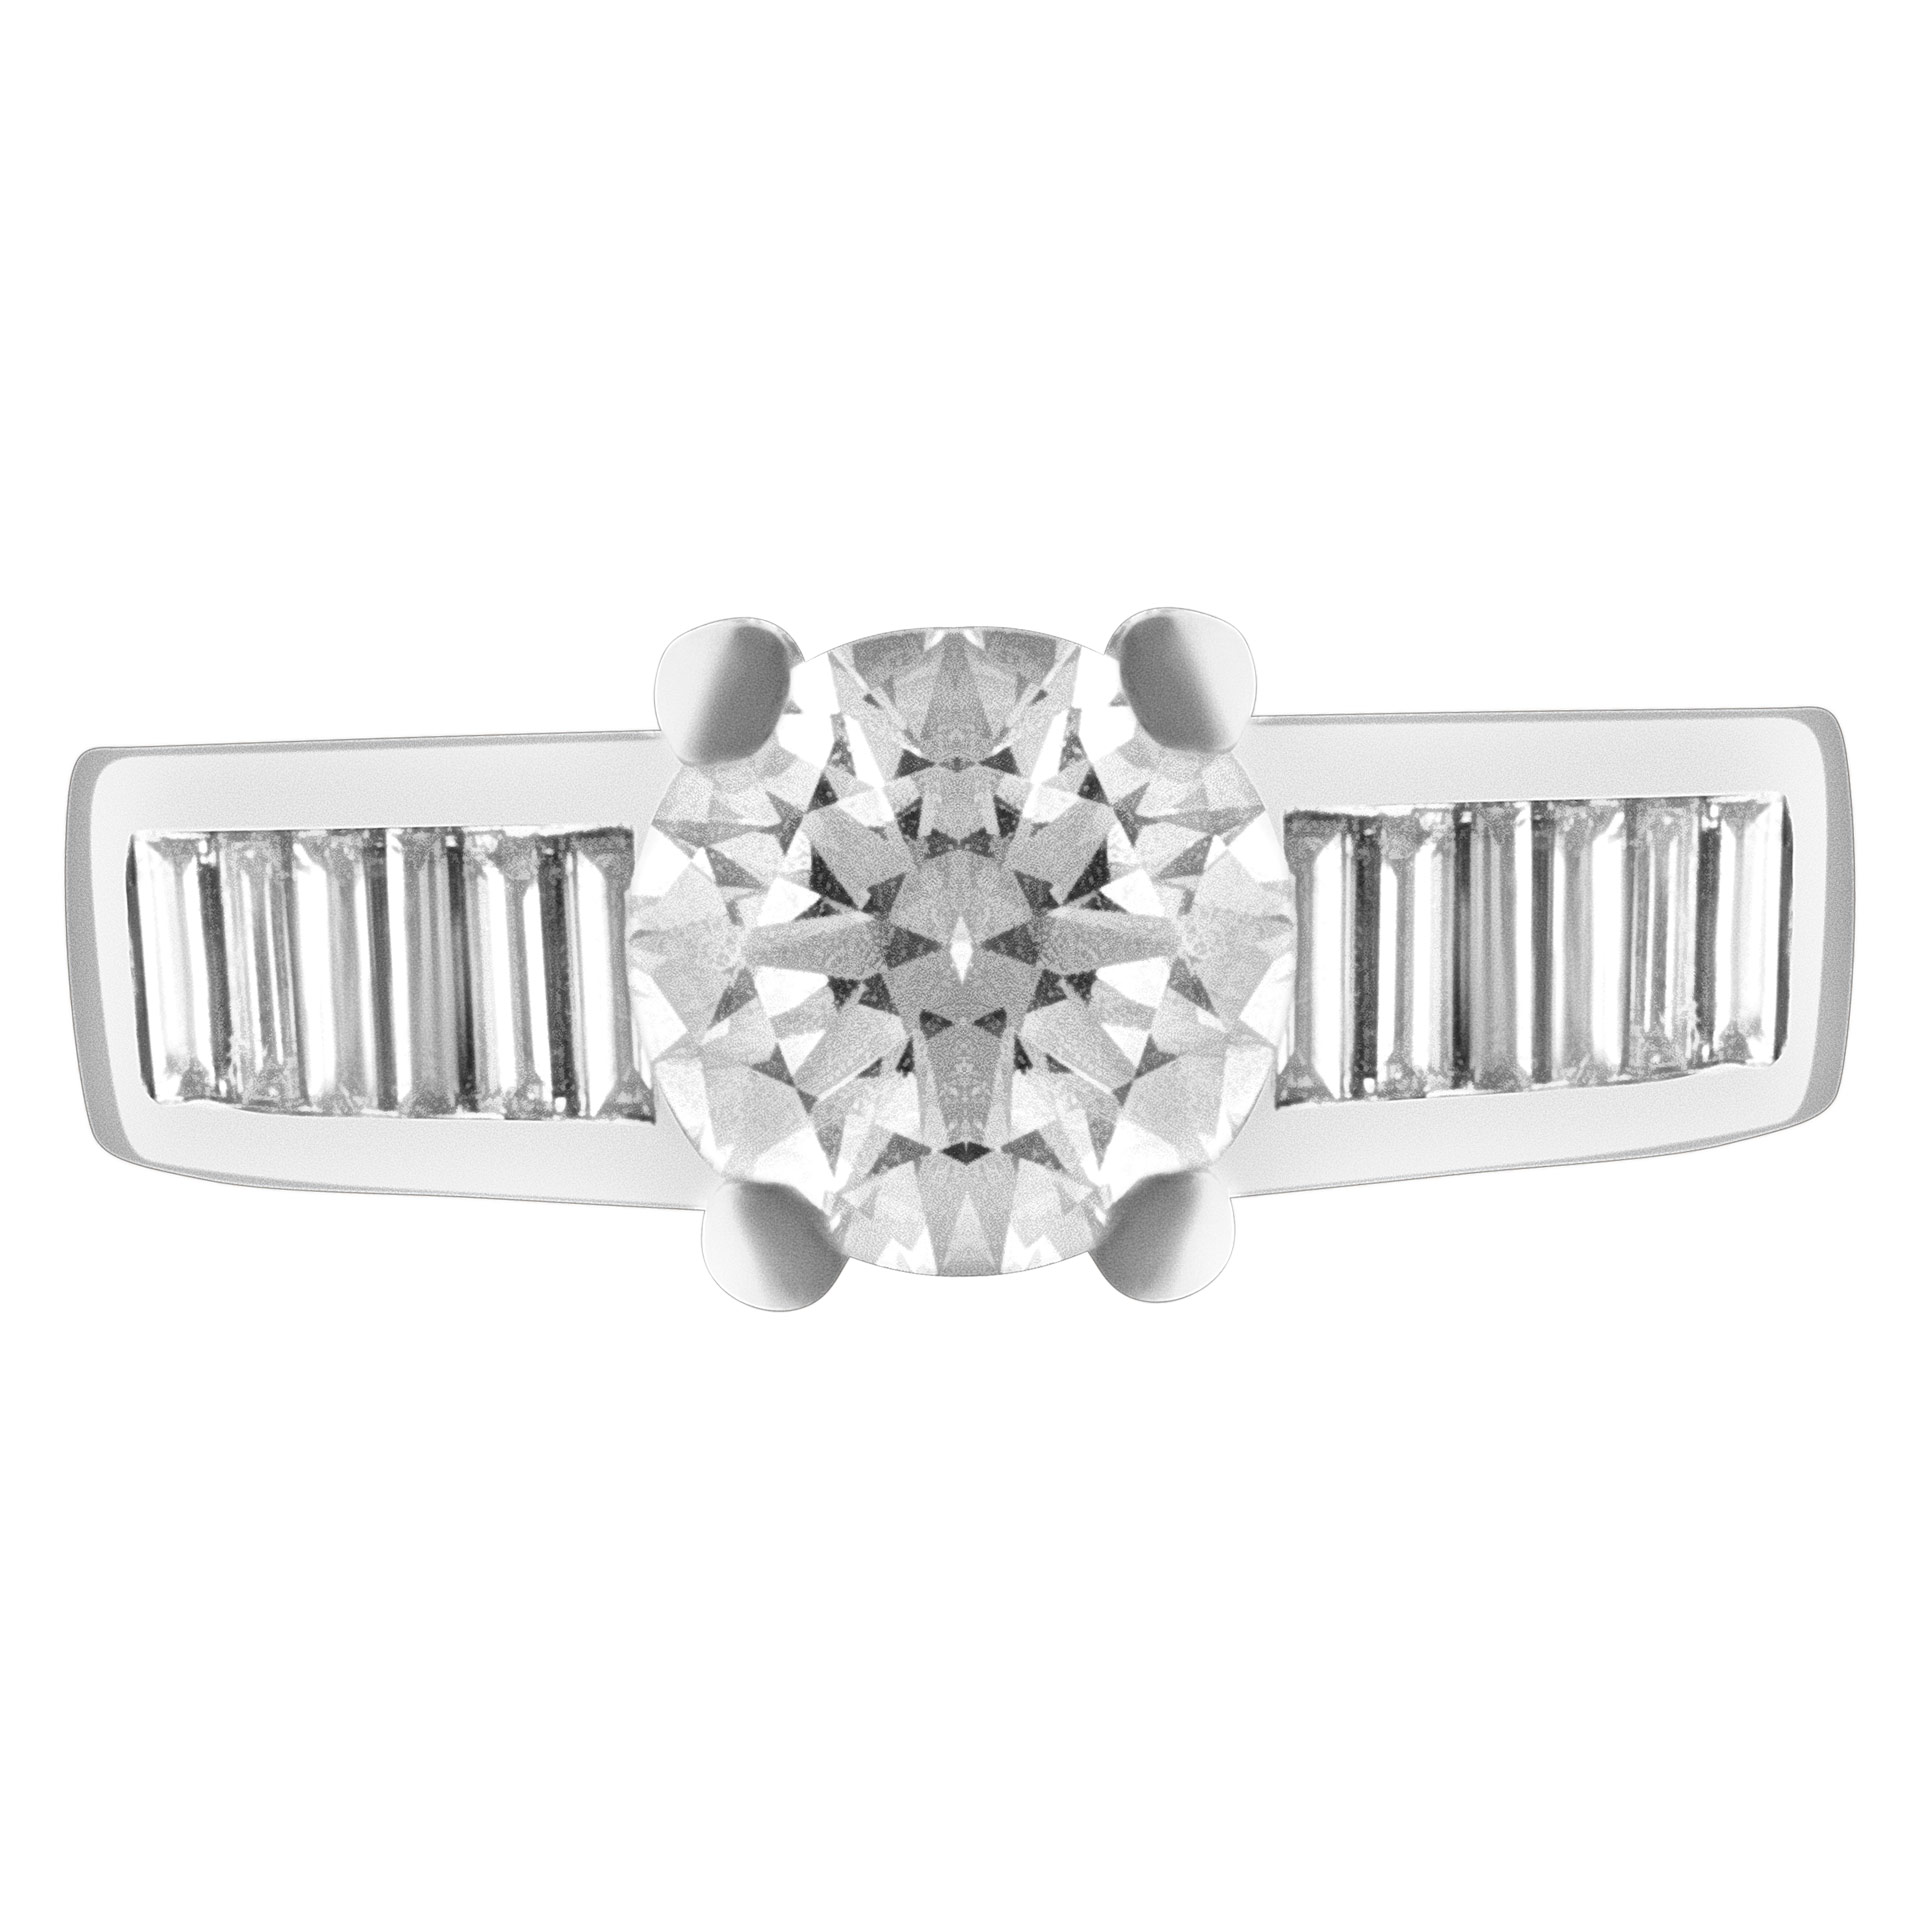 GIA certified round brilliant cut 1.14 carat D color, VS2 clarity diamond ring